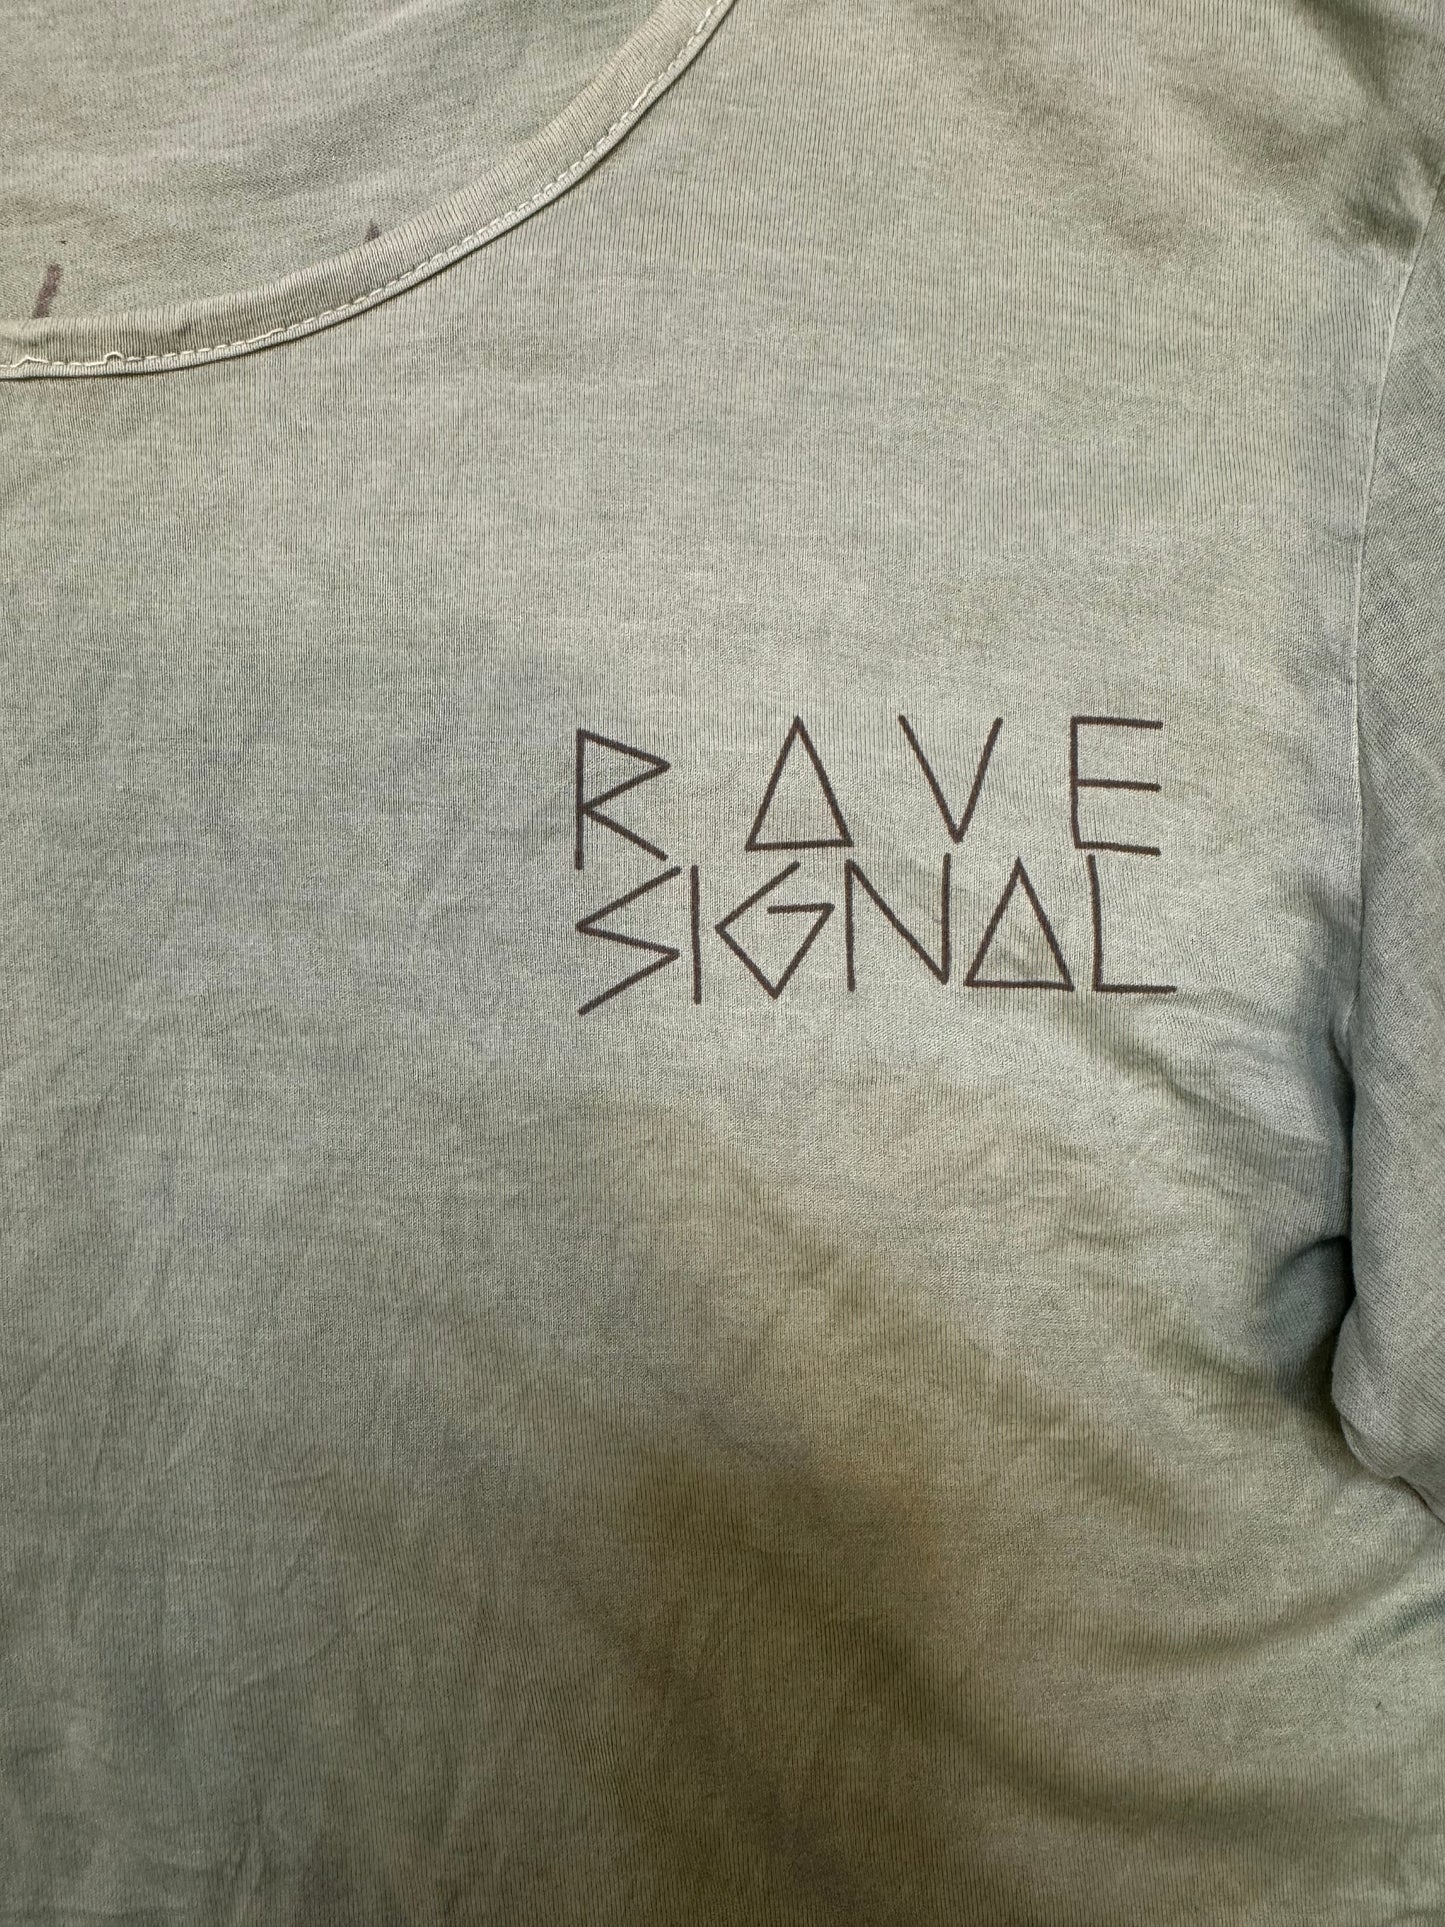 Raf Simons 2004 Rave Signal Long Sleeve Shirt